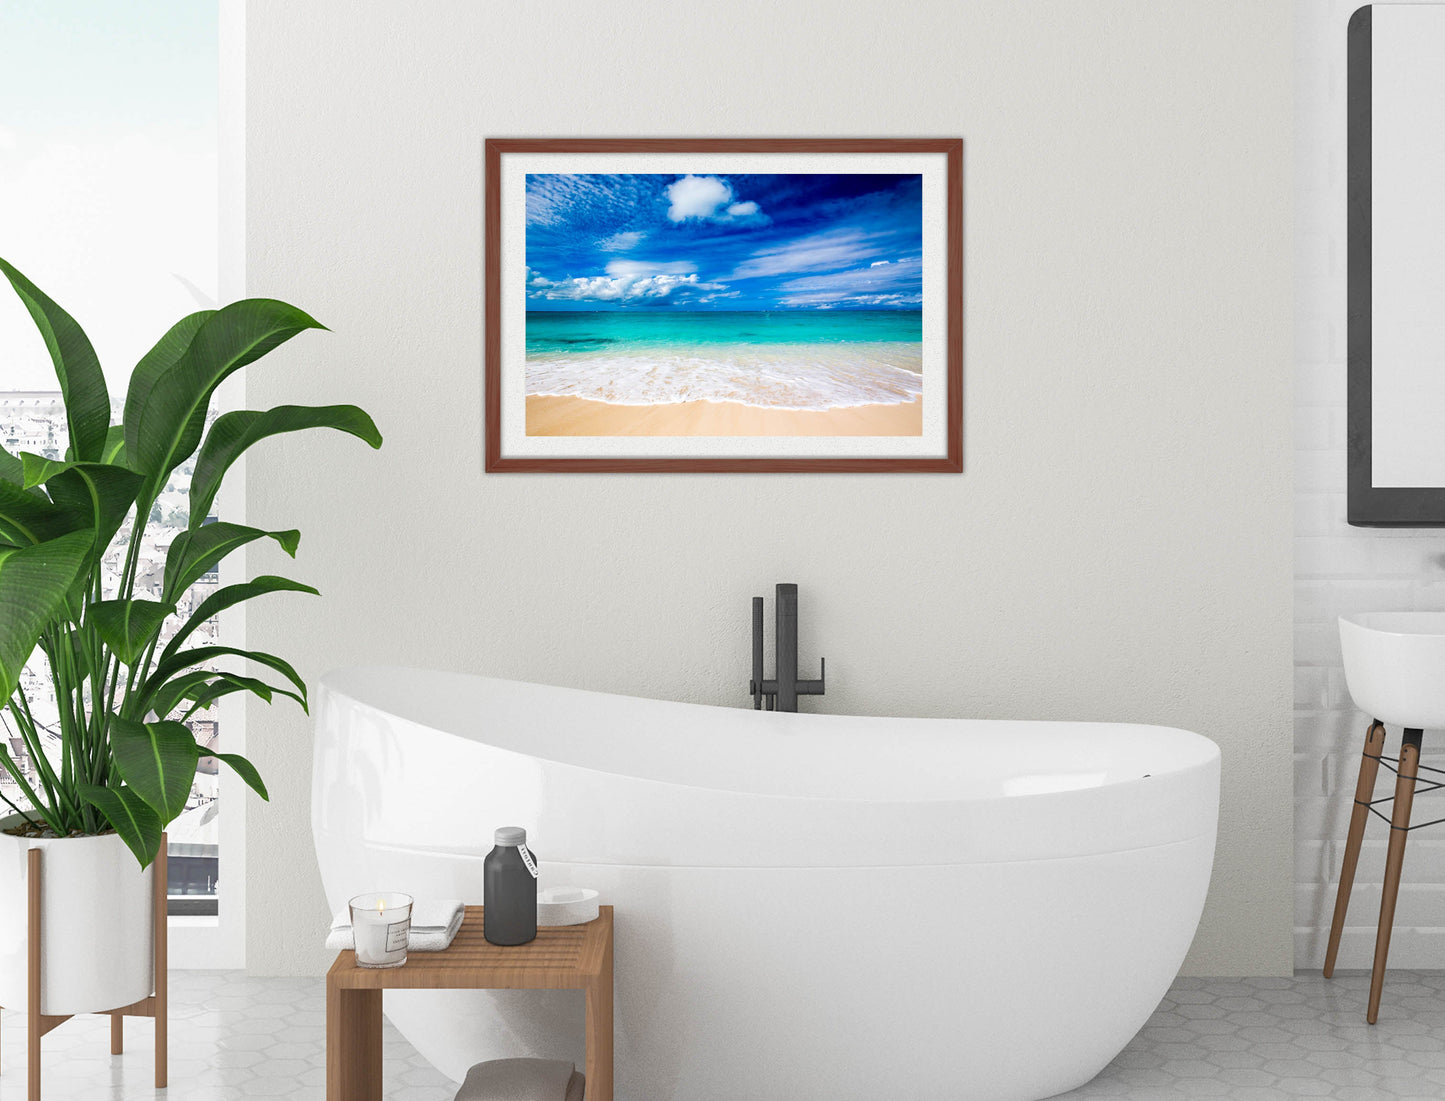 White Sand Beach - Evening on the Pond - Framed Photo - Mahogany Frame on Bathroom Wall